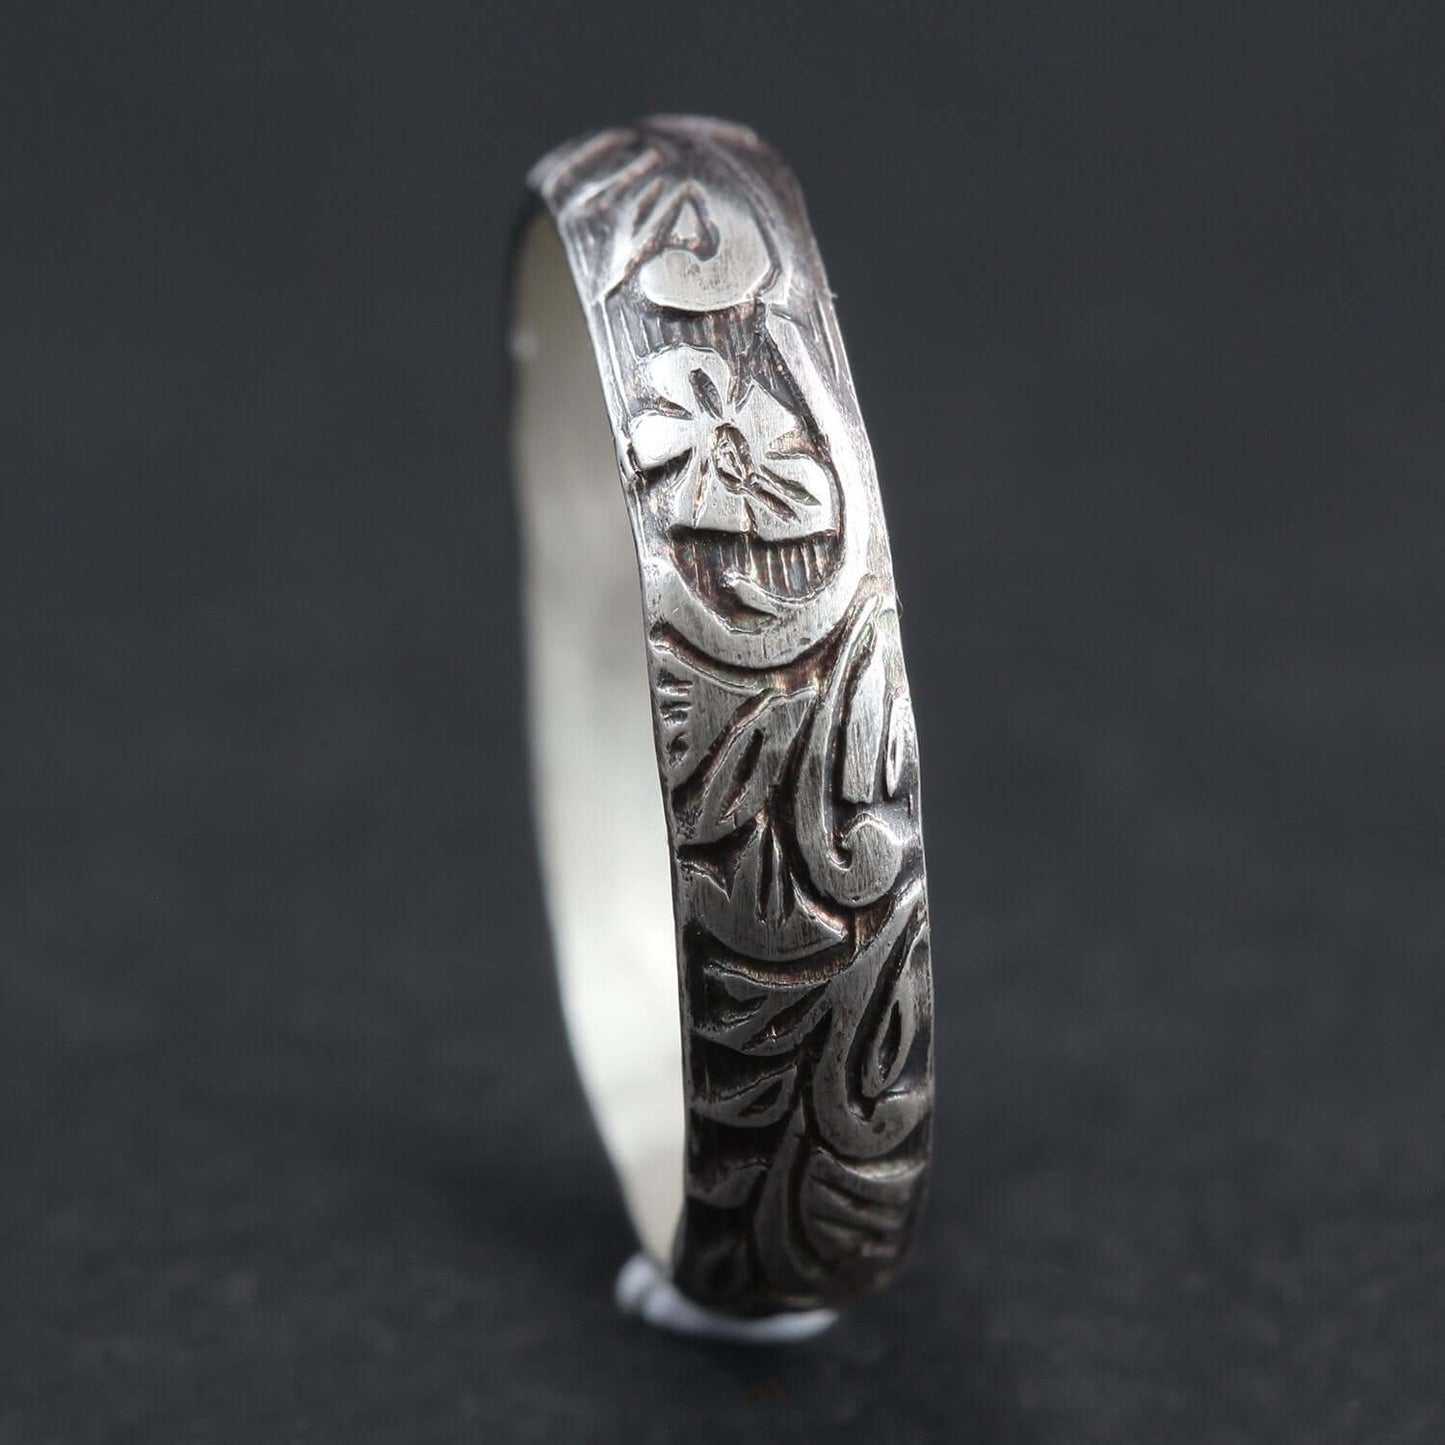 Sterling Silver Floral Ring - Rebecca Cordingley